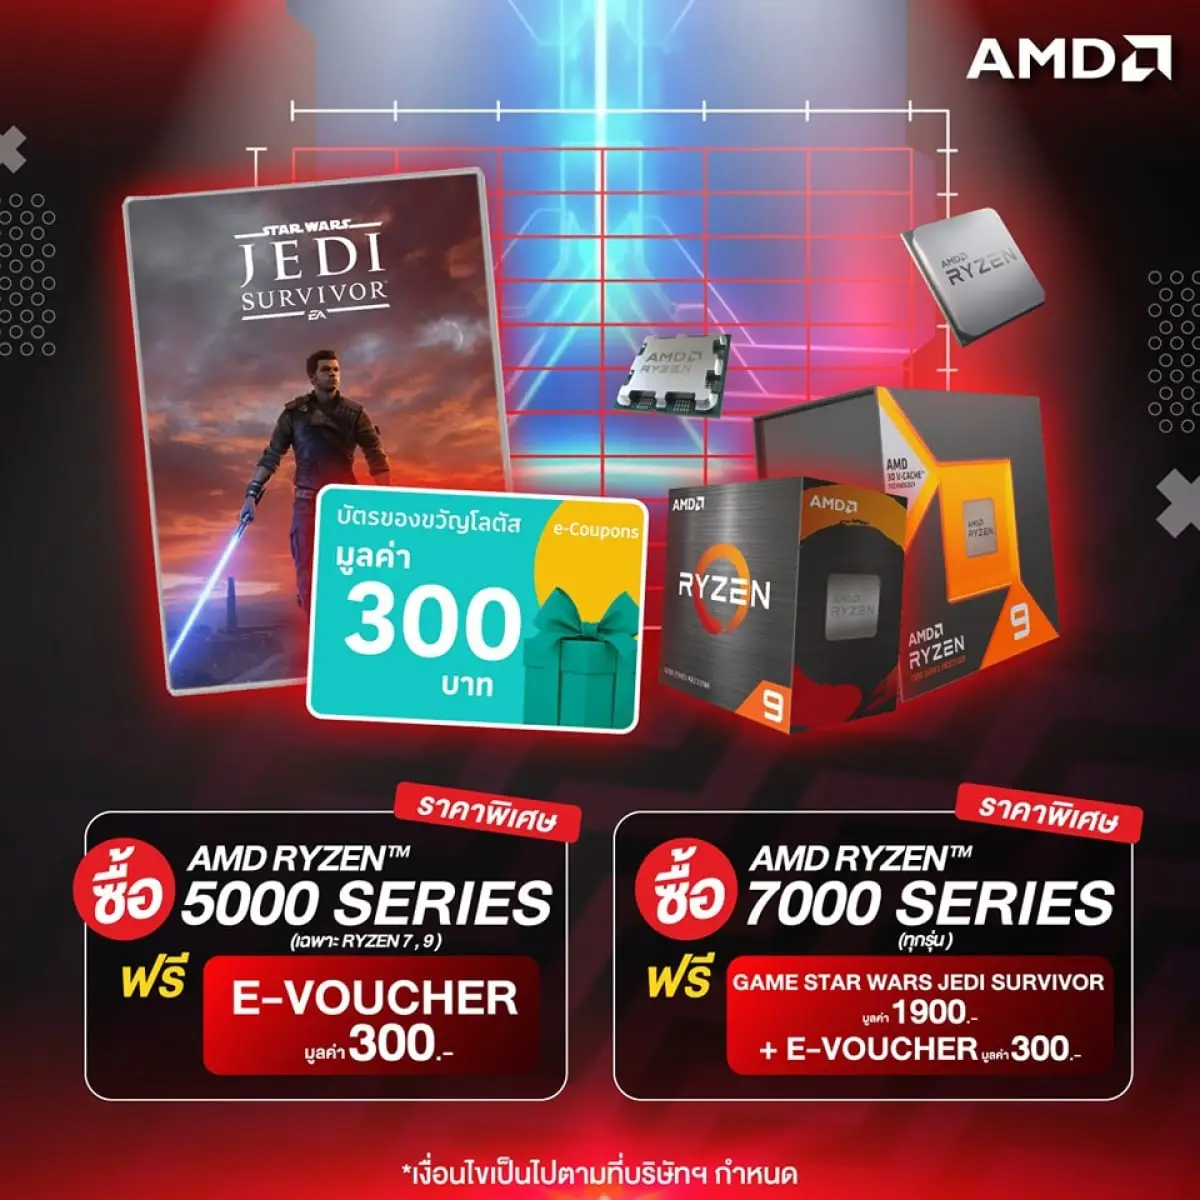 AMD โปรโมชัน โปรเซสเซอร์ กราฟิกการ์ด Jedi